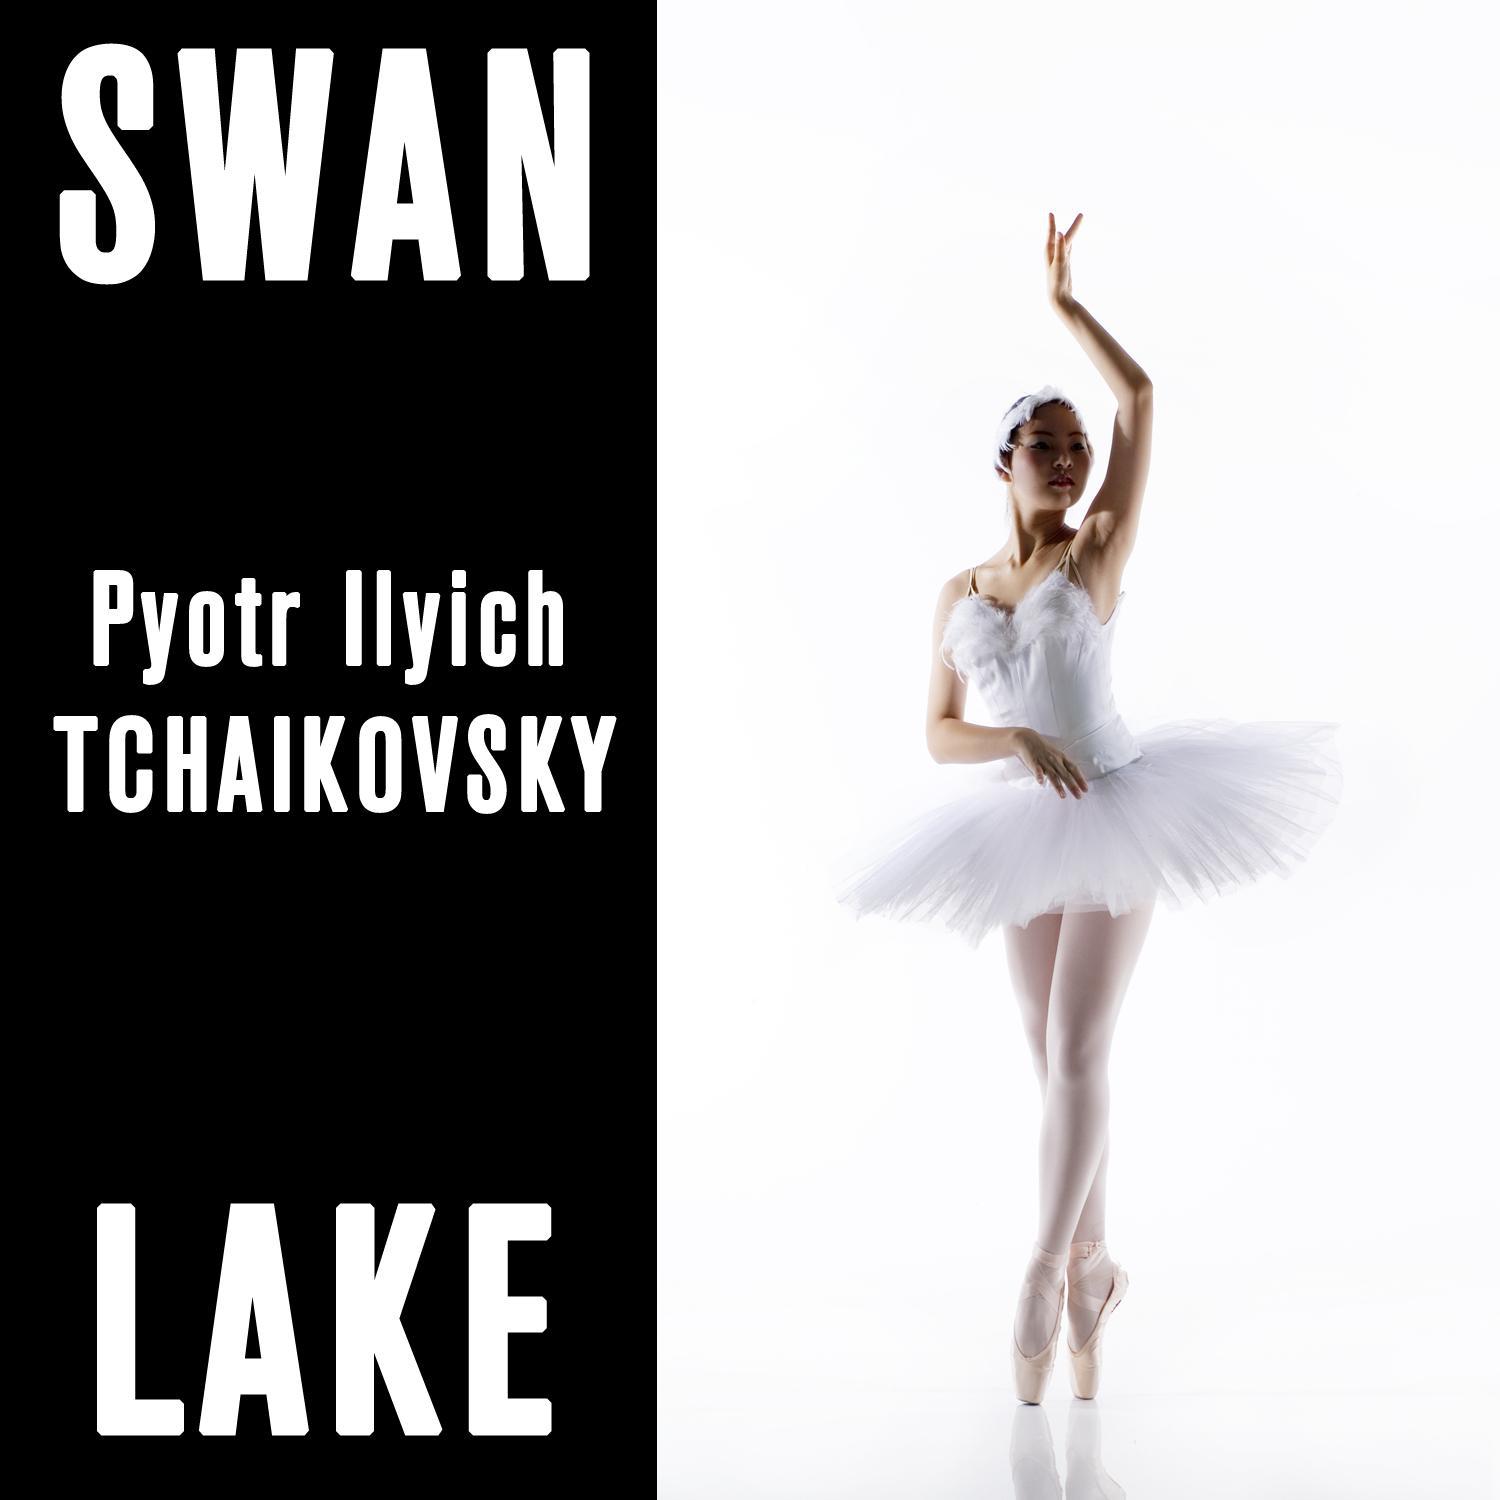 Swan Lake, Op. 20: Introduction. Moderato assai - Allegro non troppo